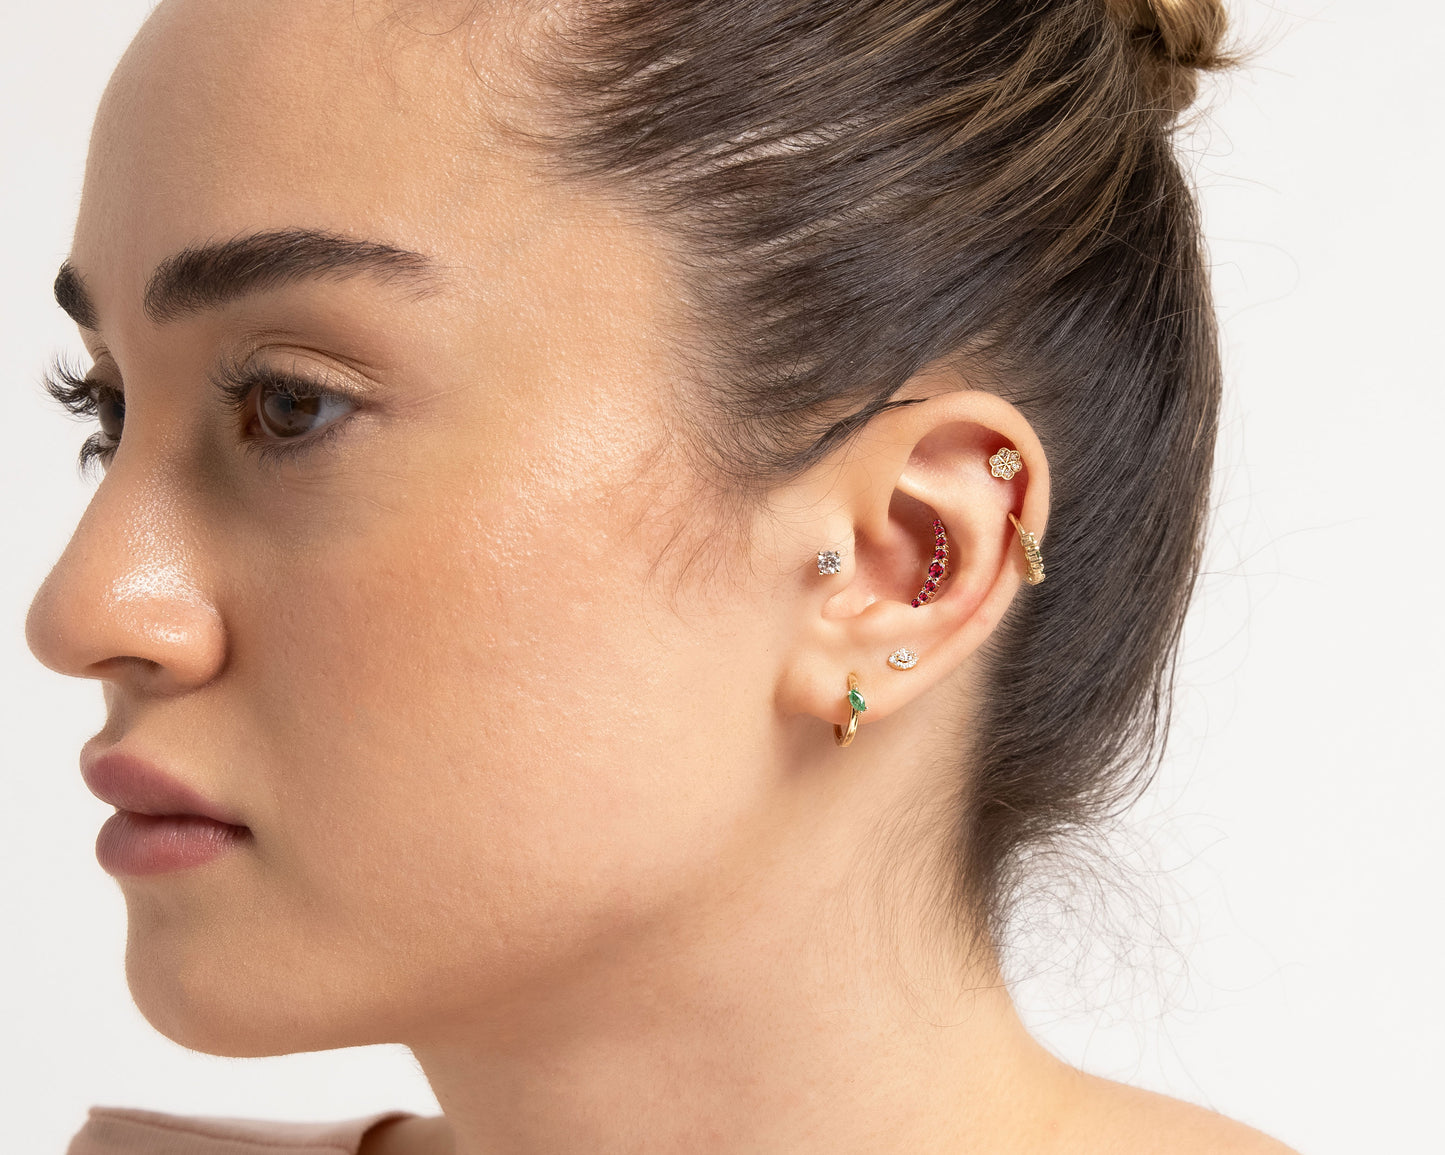 Ruby Moon Design Cartilage Clicker Piercing Single Helix Stud Earring